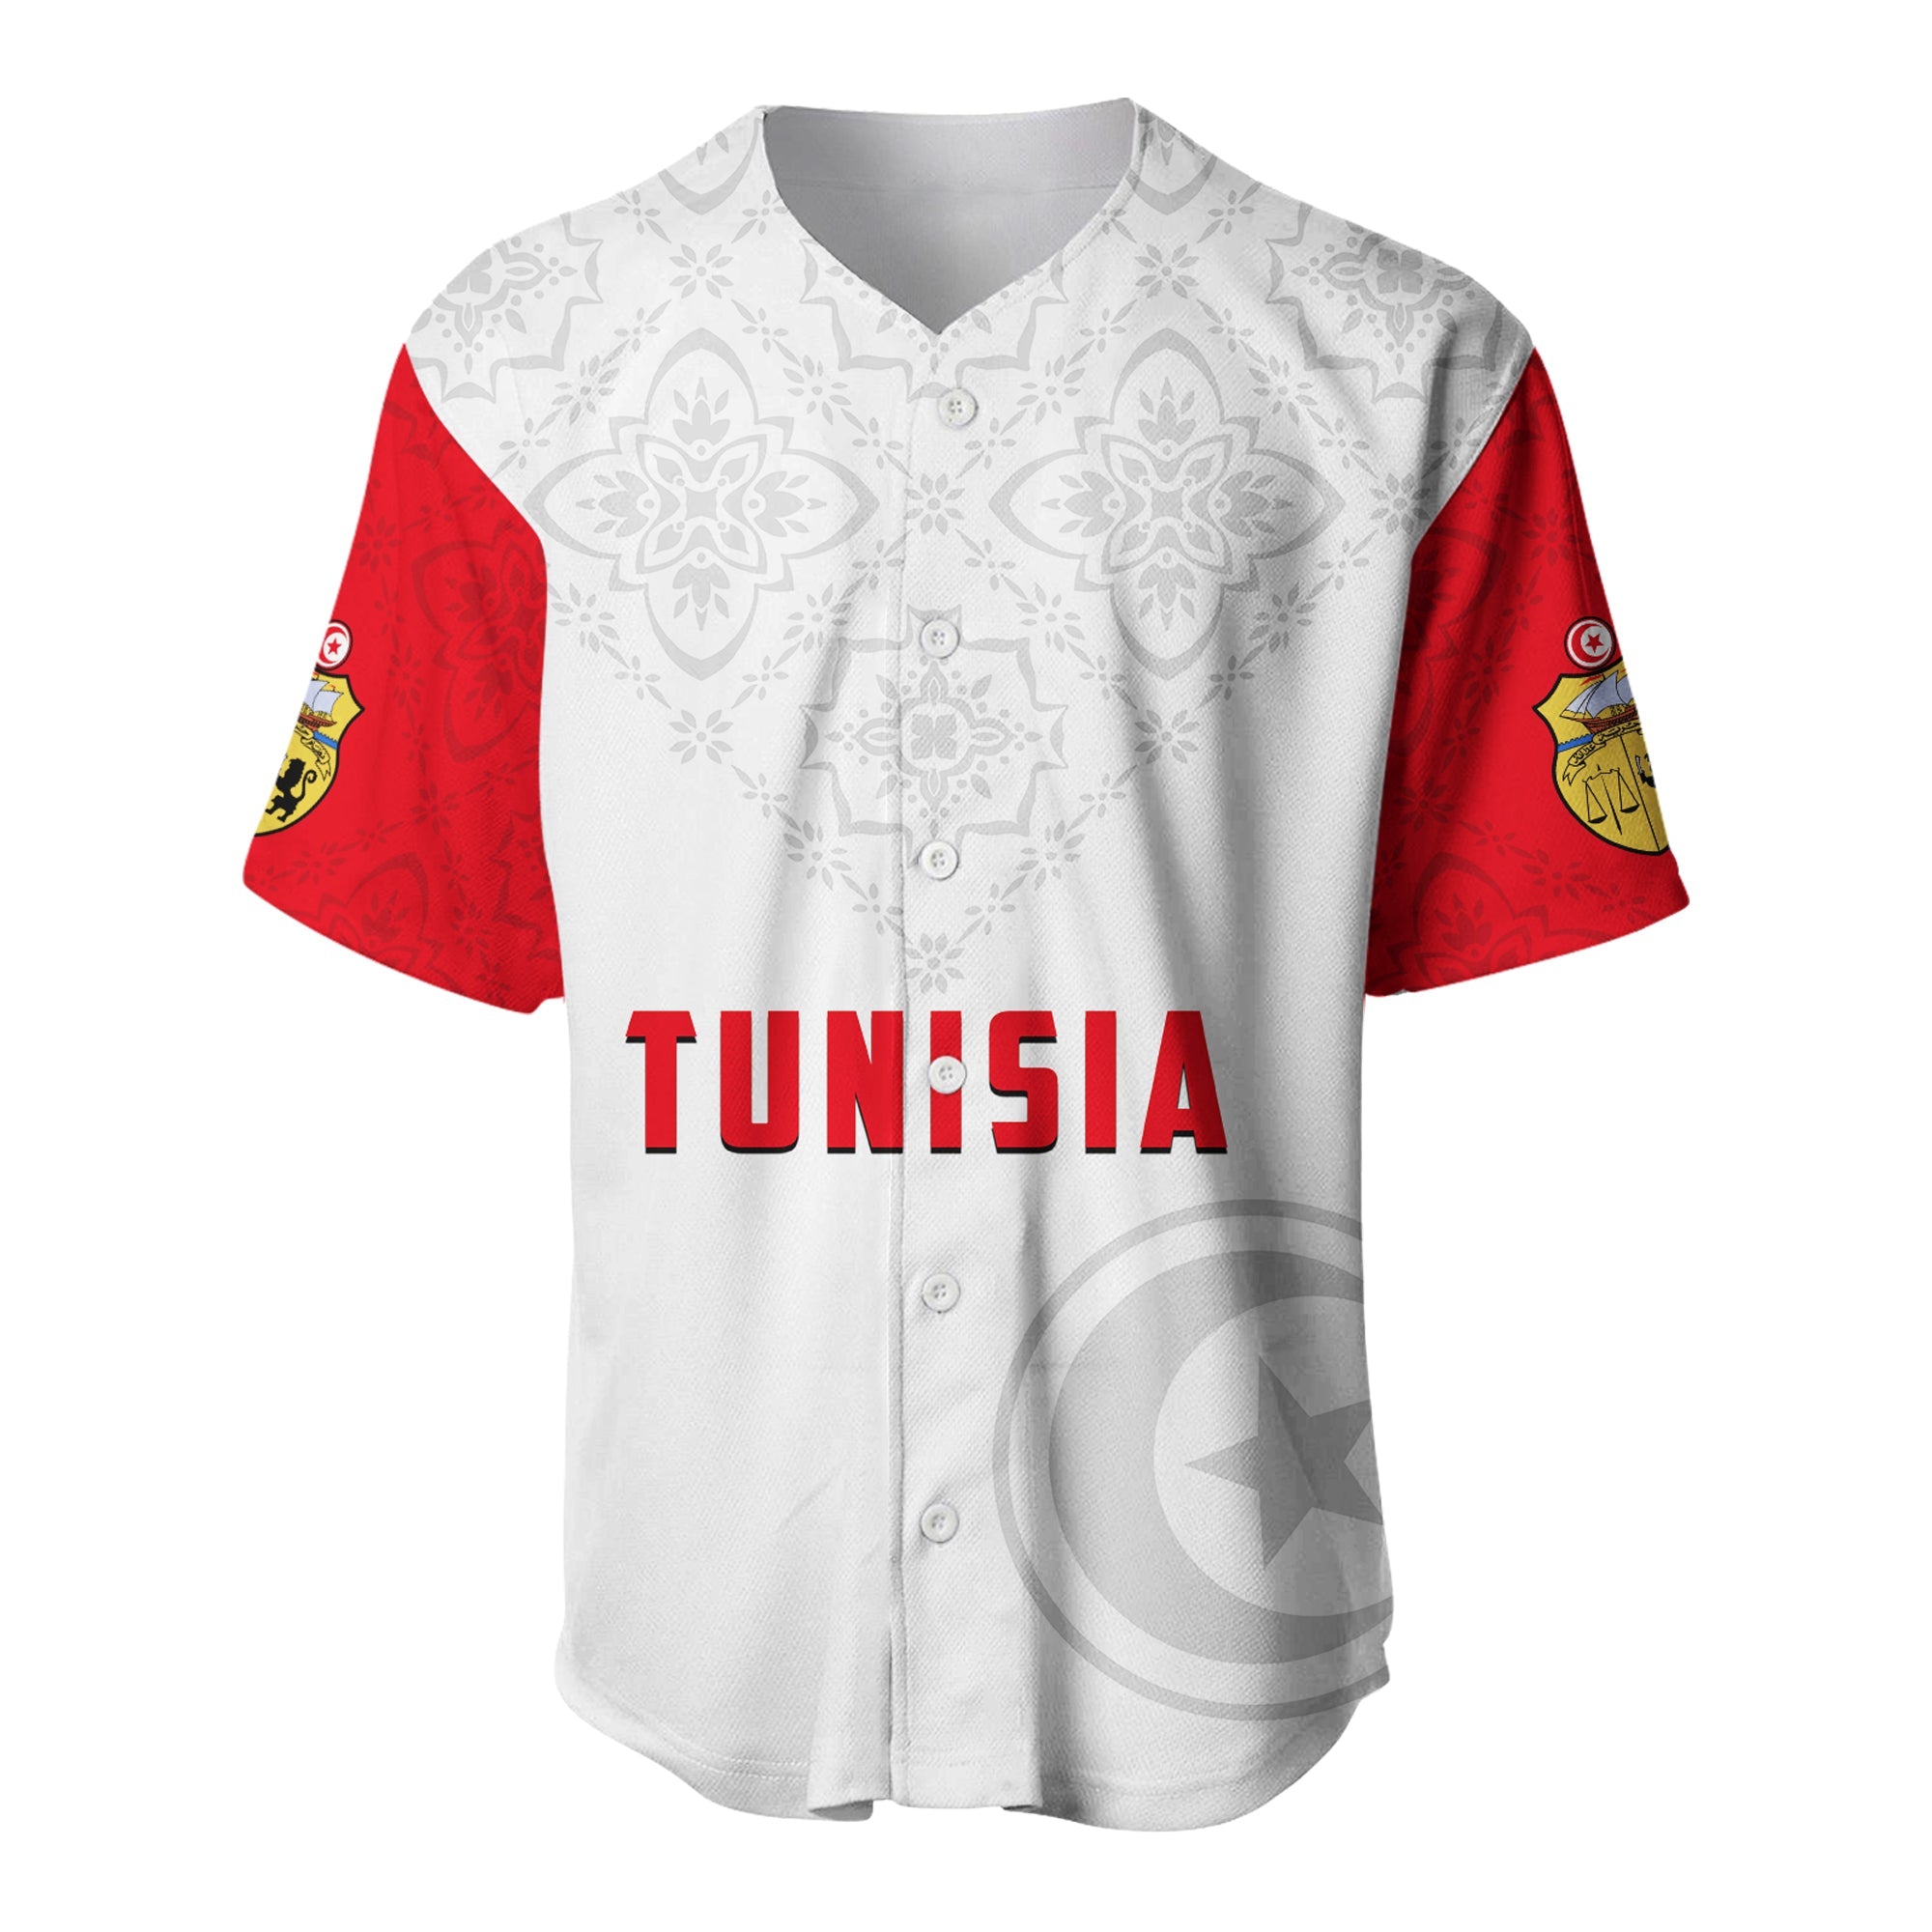 tunisia-baseball-jersey-tunisian-patterns-sporty-style